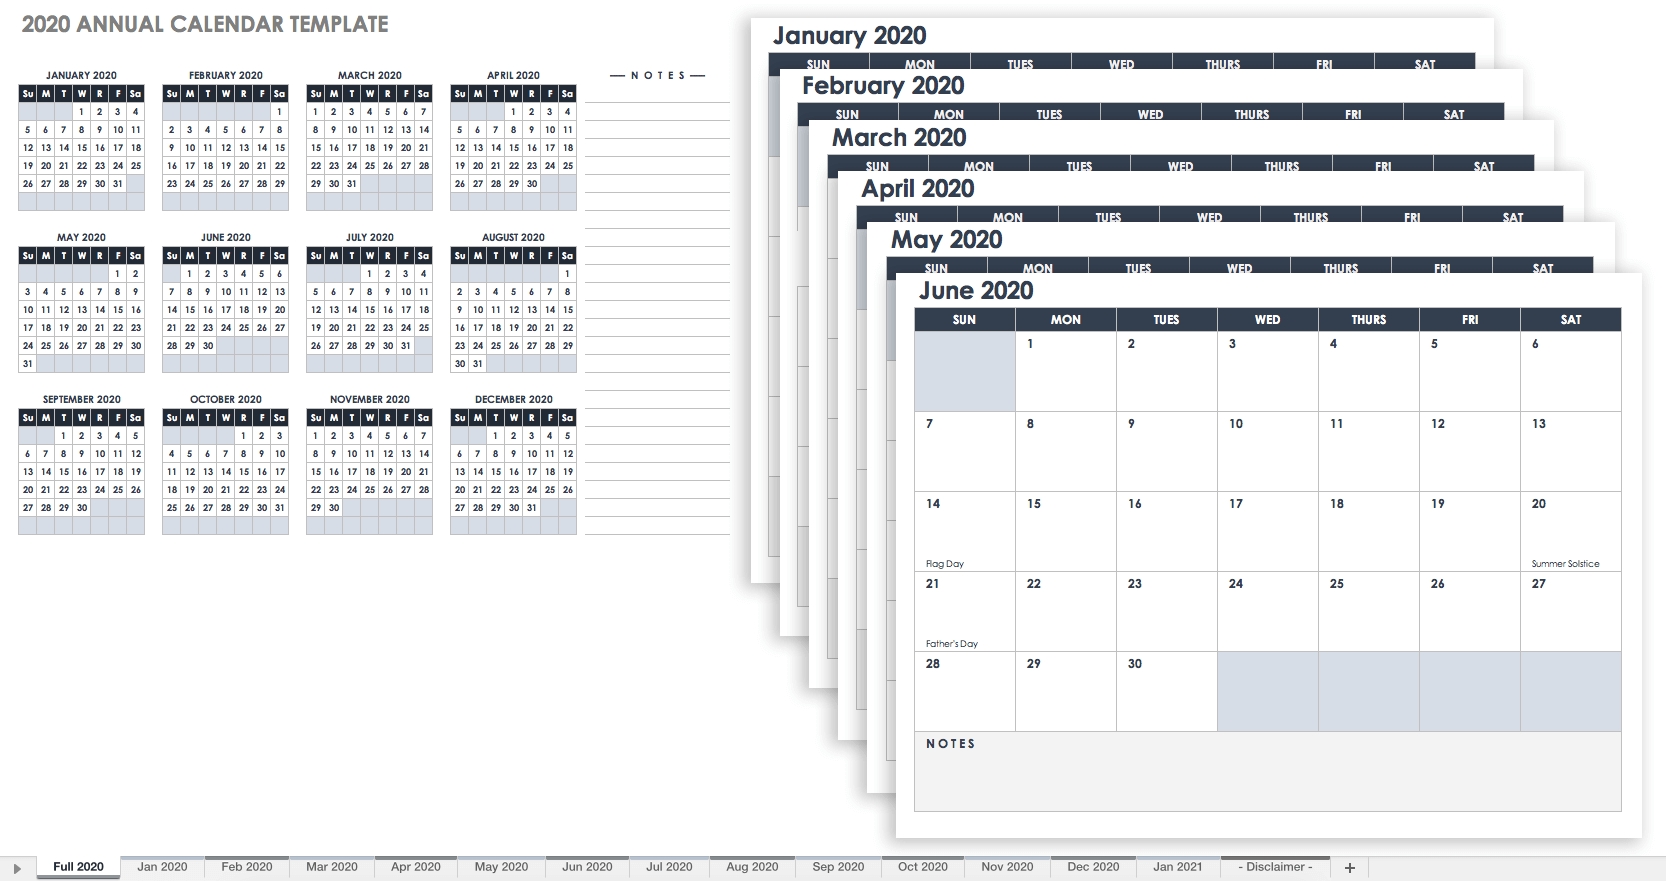 Free Blank Calendar Templates - Smartsheet intended for 2019-2020 Blank Calendar To Print